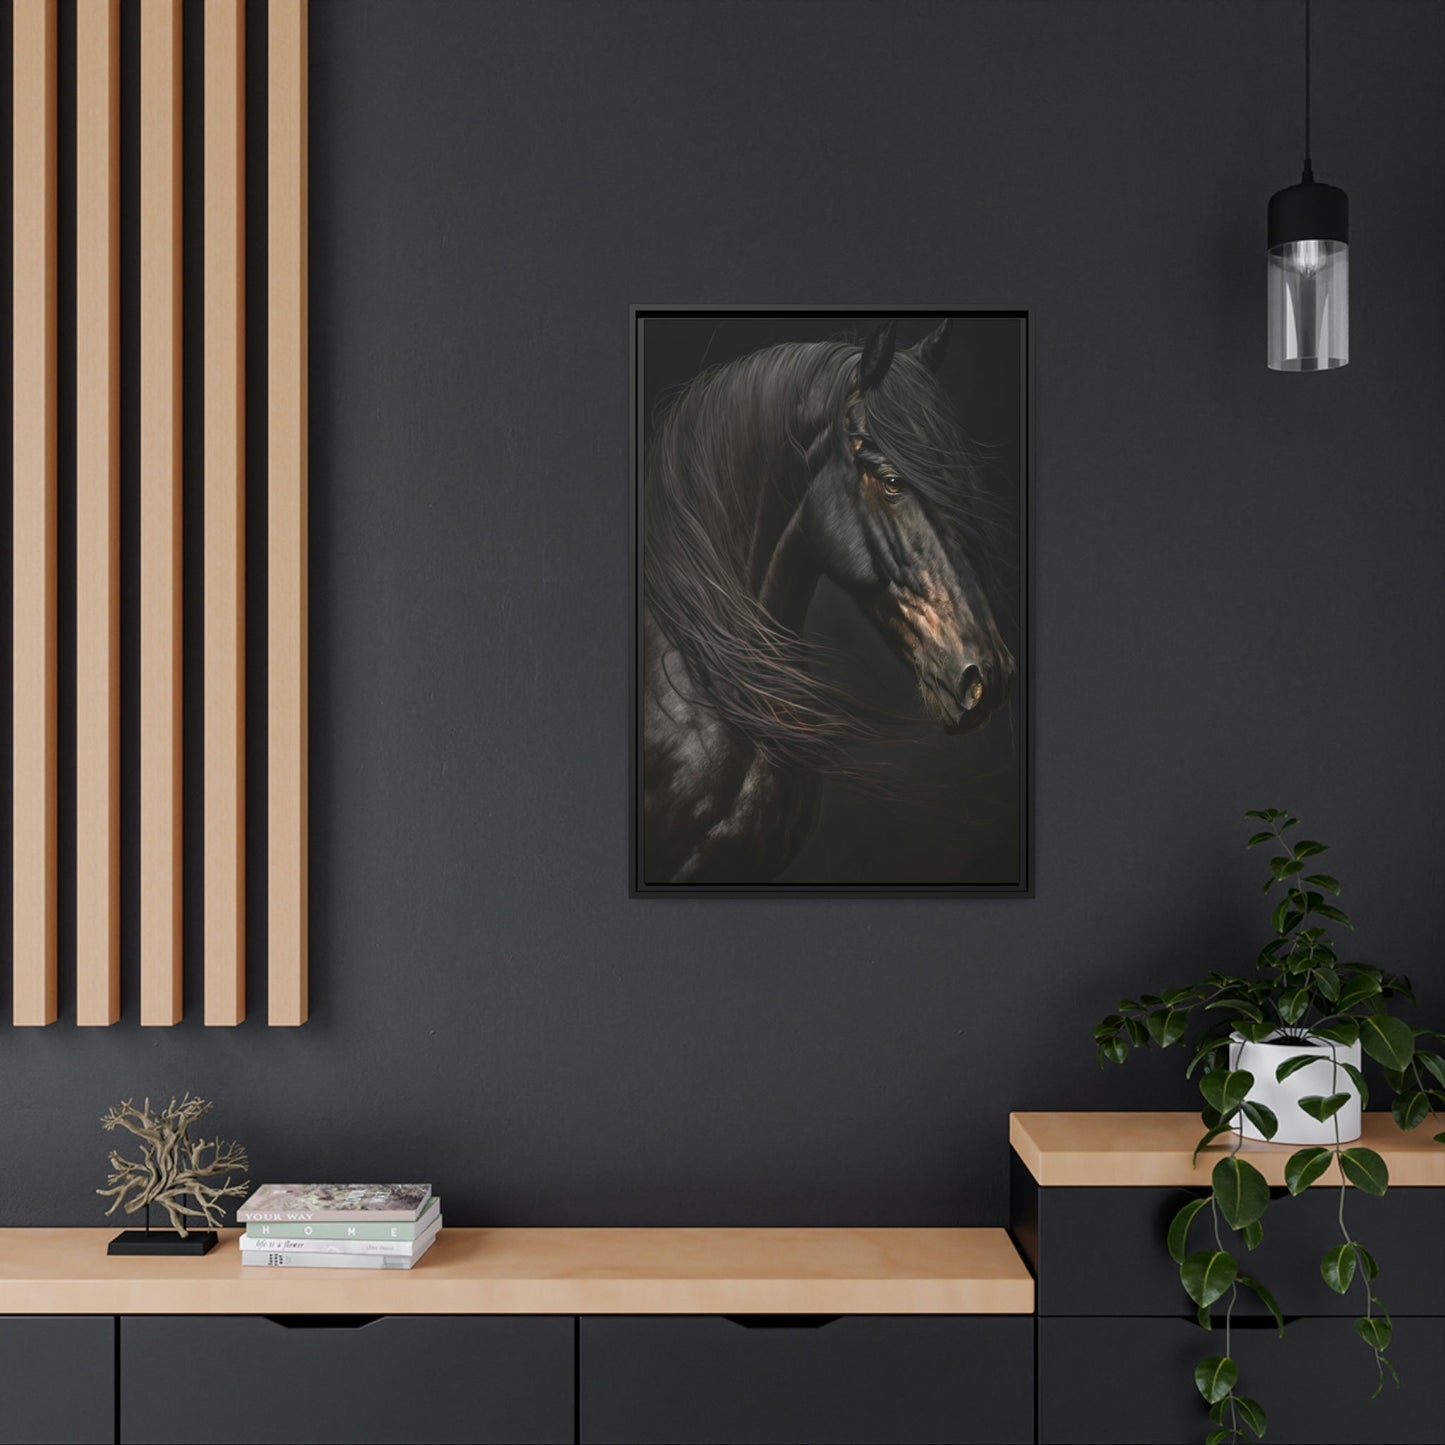 Horse Serenity: A Canvas Equine Calm